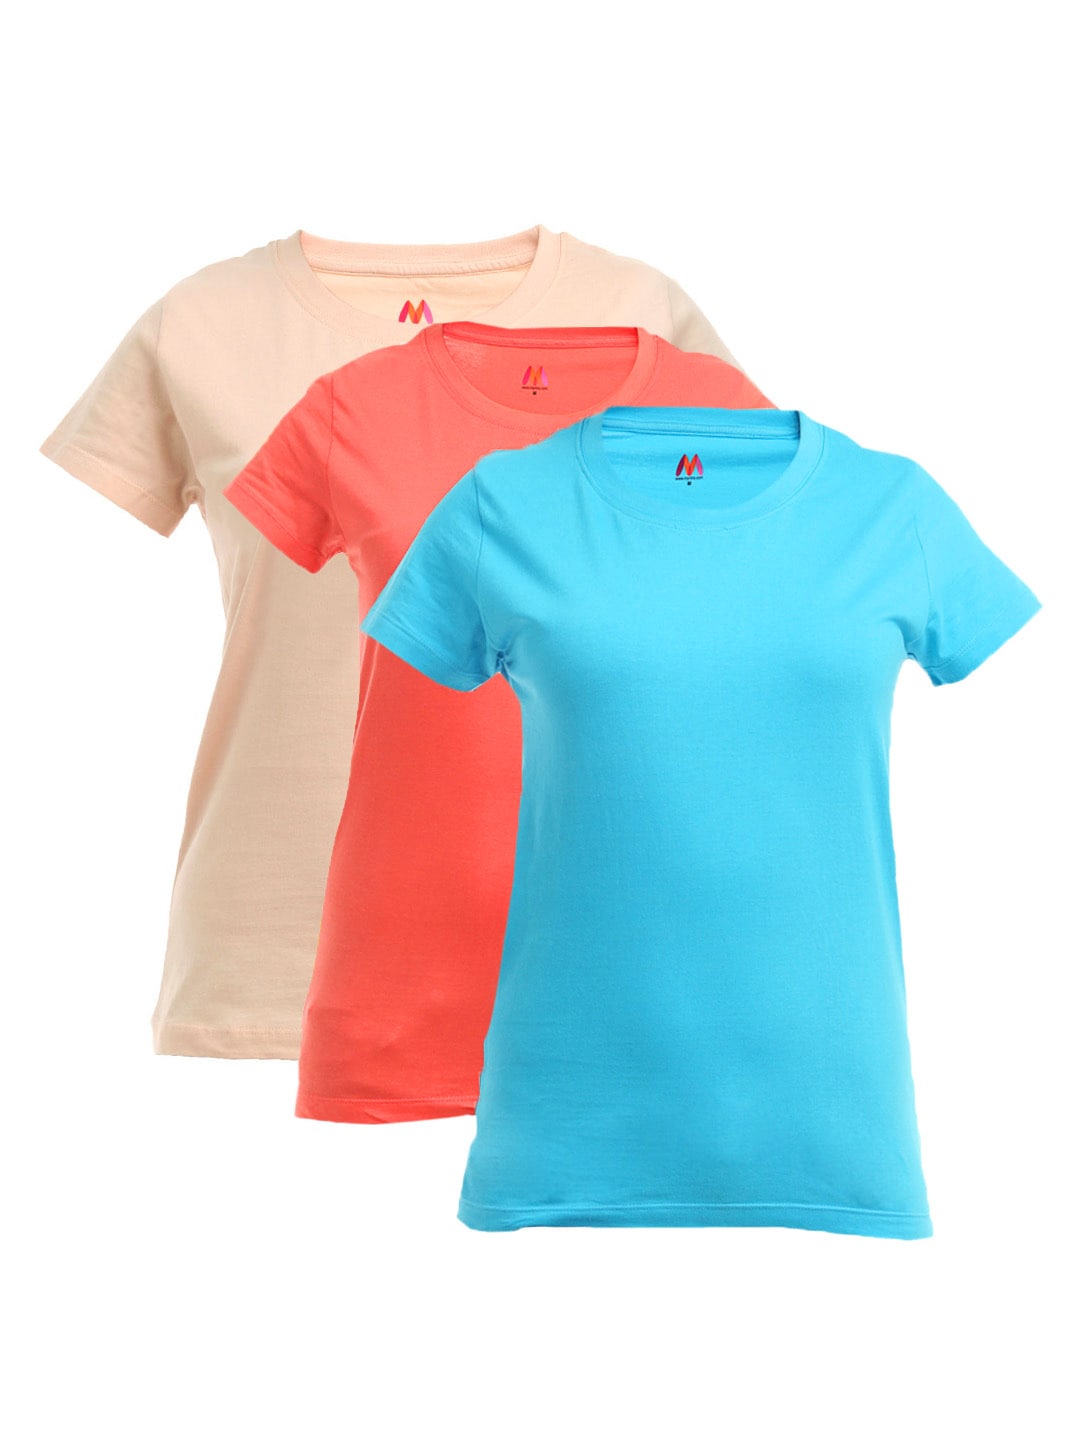 Myntra Women Pack of 3 T-shirts